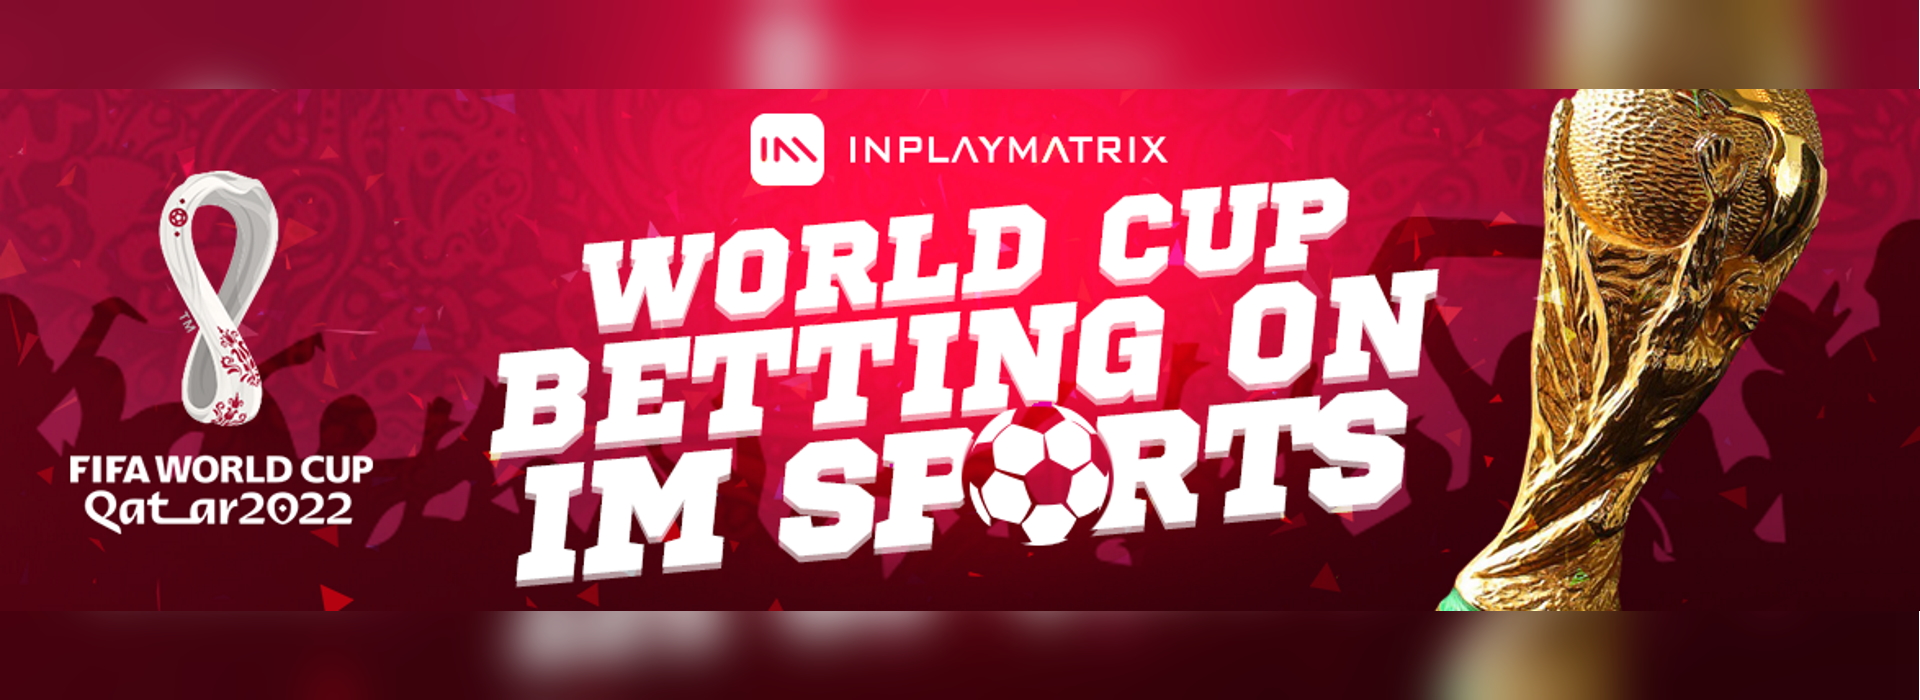 Inplay Matrix World Cup Betting On IM Sports Web Banner - GamingSoft